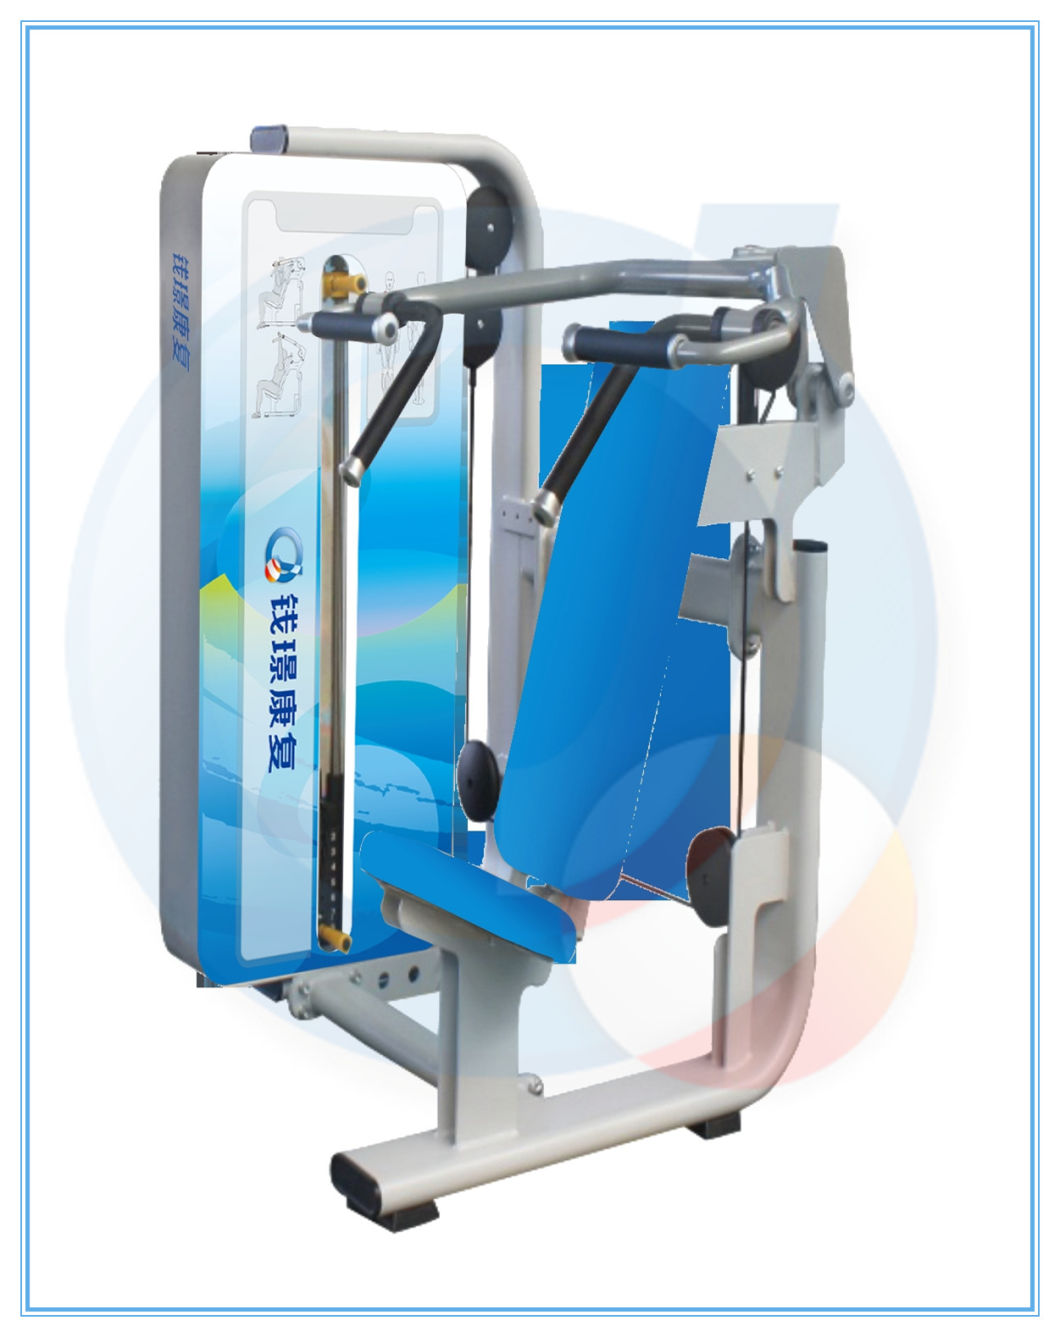 Aws103 Shoulder Press Weight Training System Gym and Rehabilitation Equipment